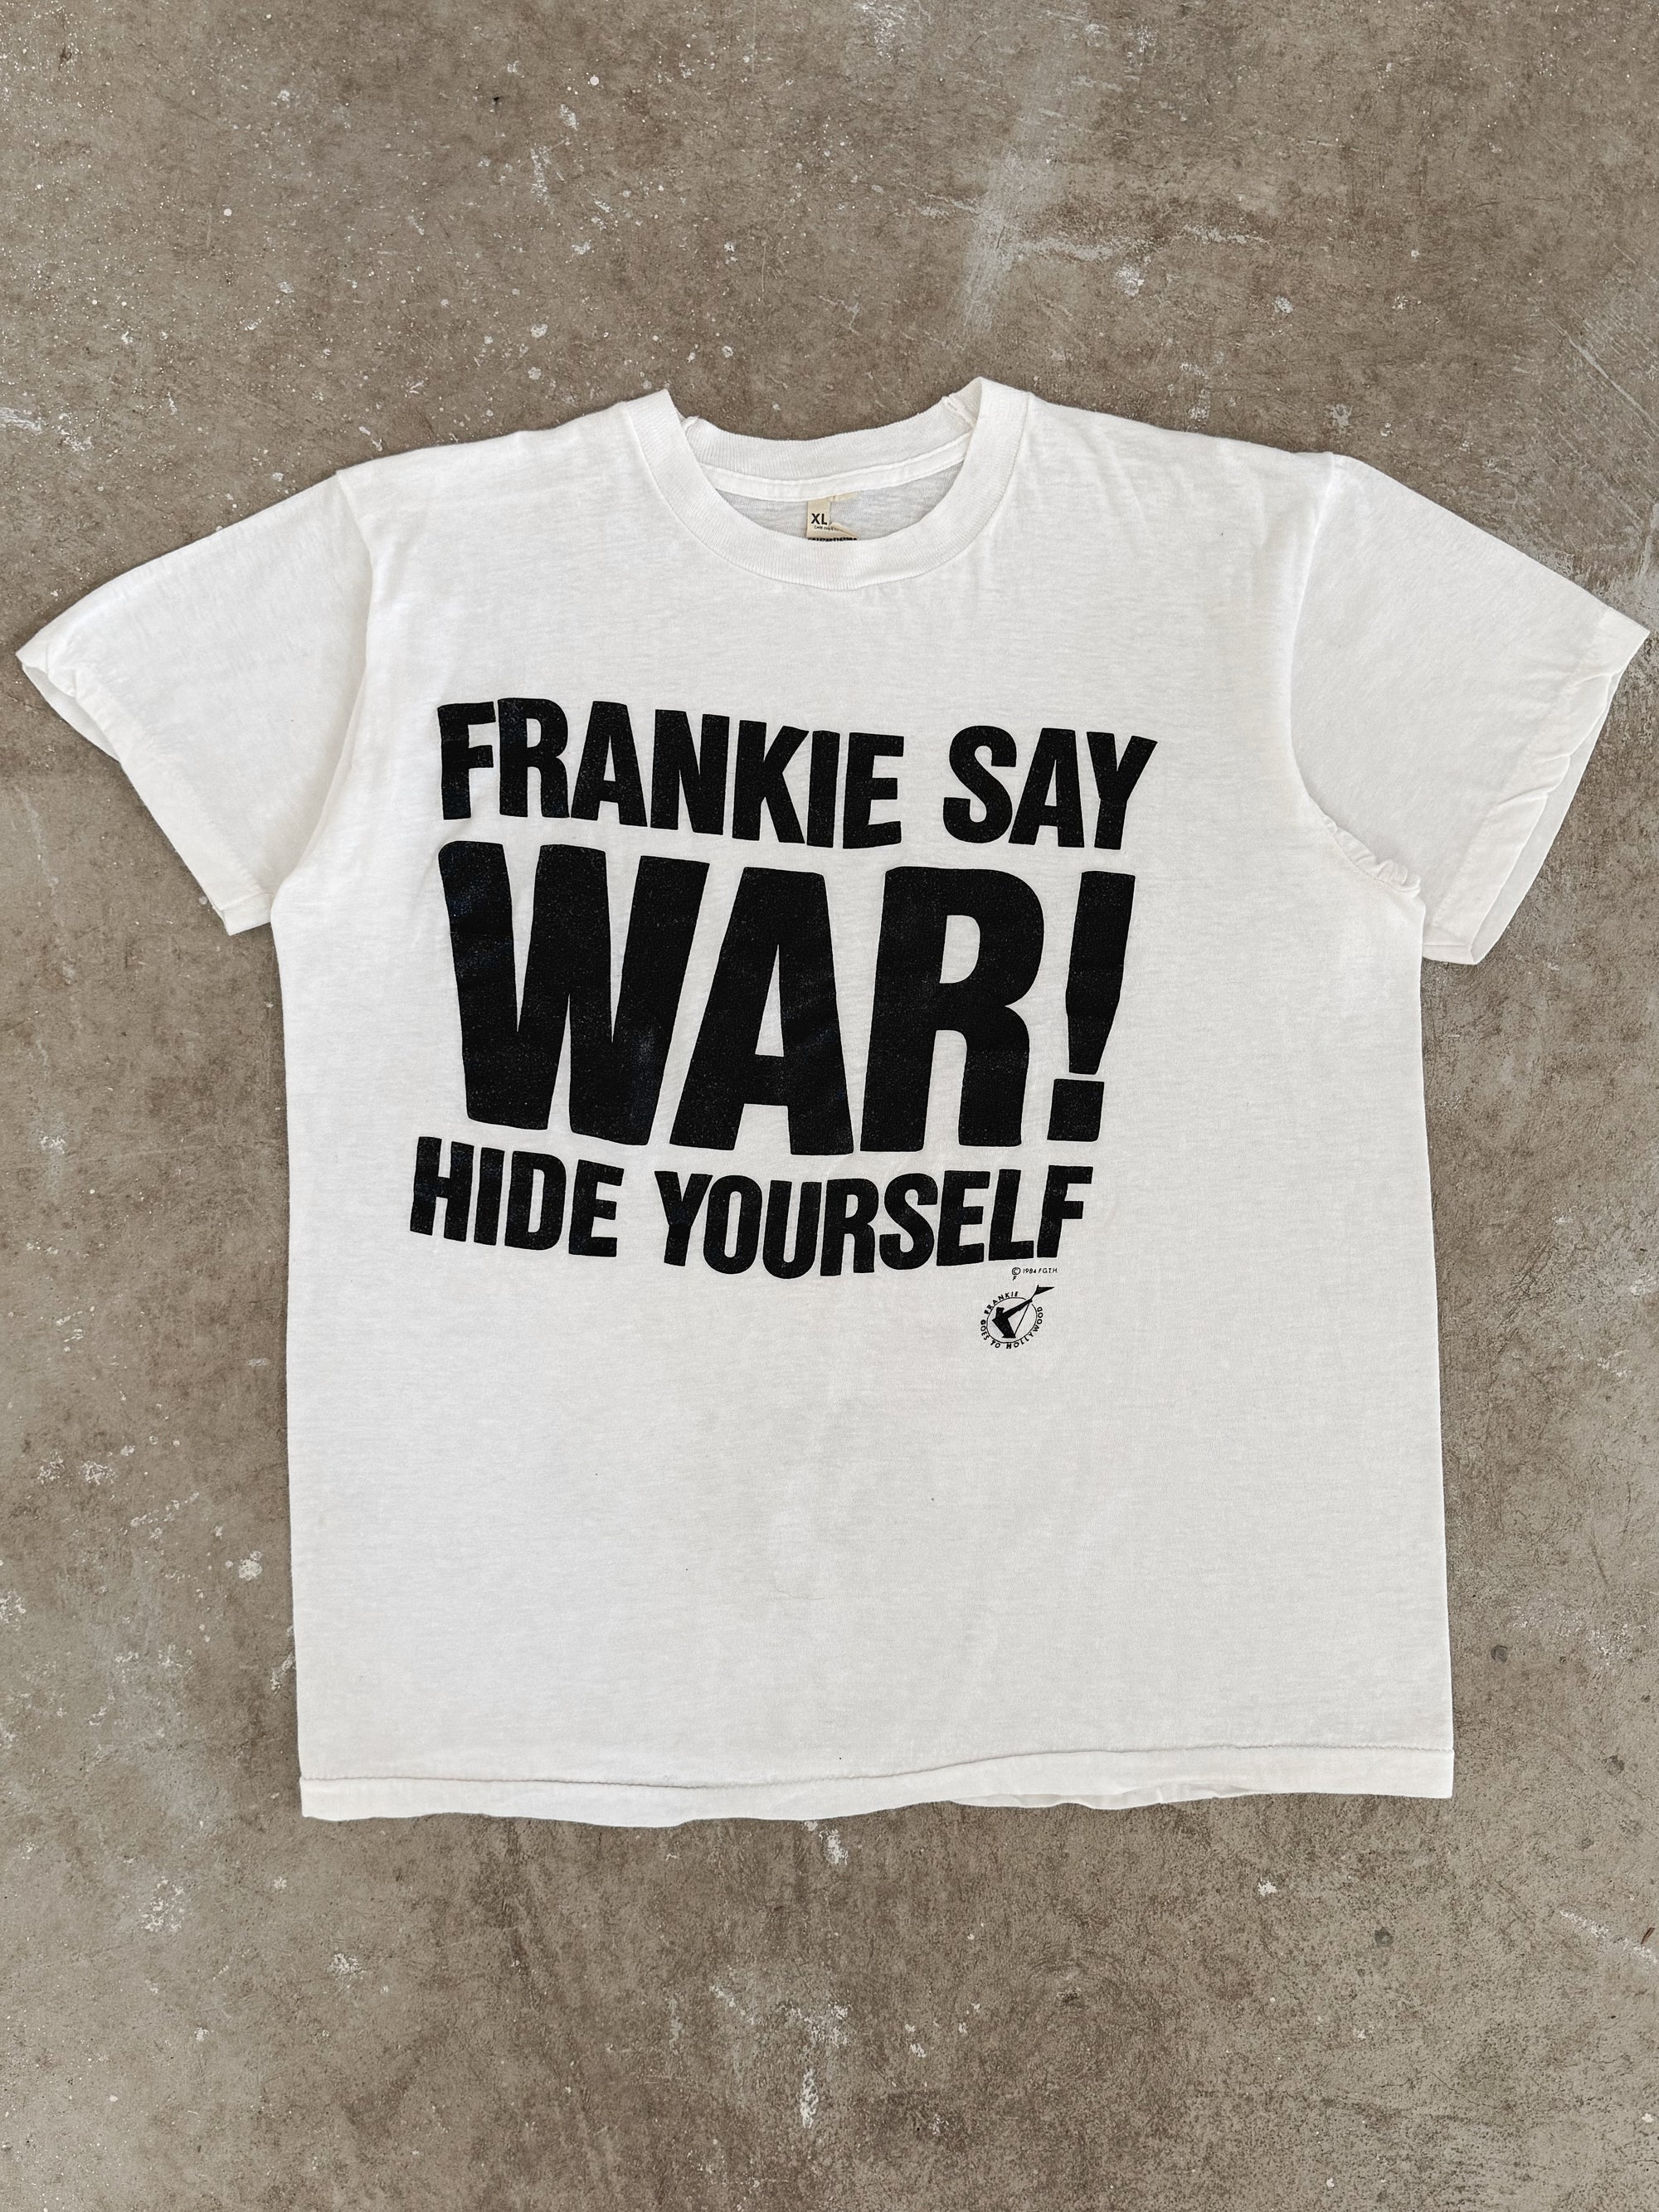 1980s "Frankie Say War!" Tee (M)